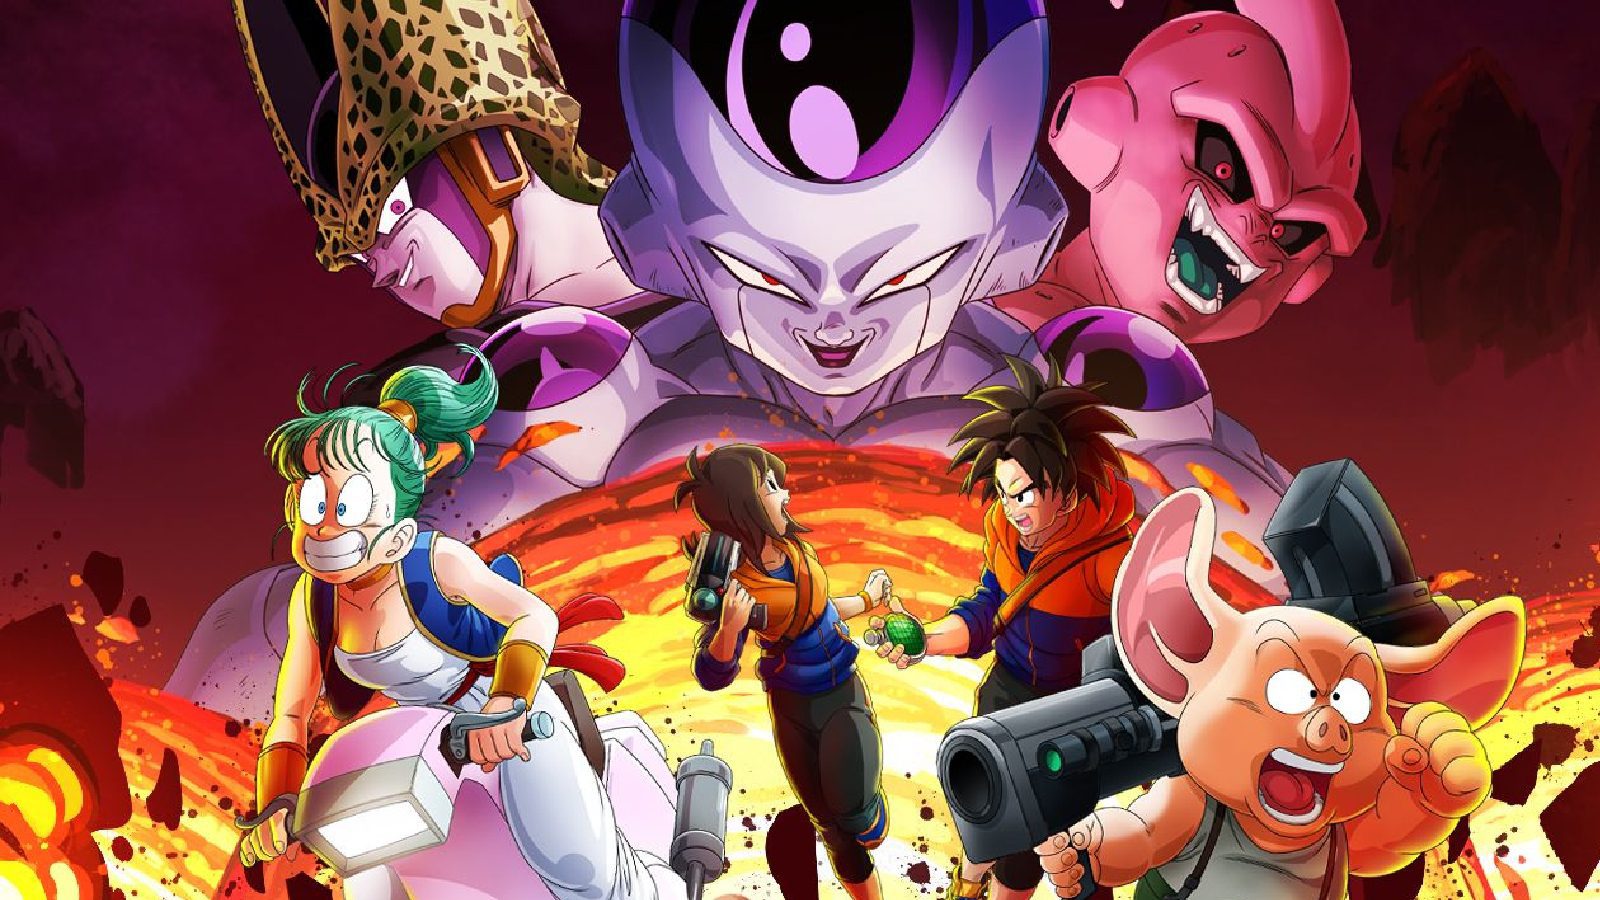 Dragon Ball: The Breakers Закрытый сетевой тест, подробности предварительного заказа и релиза